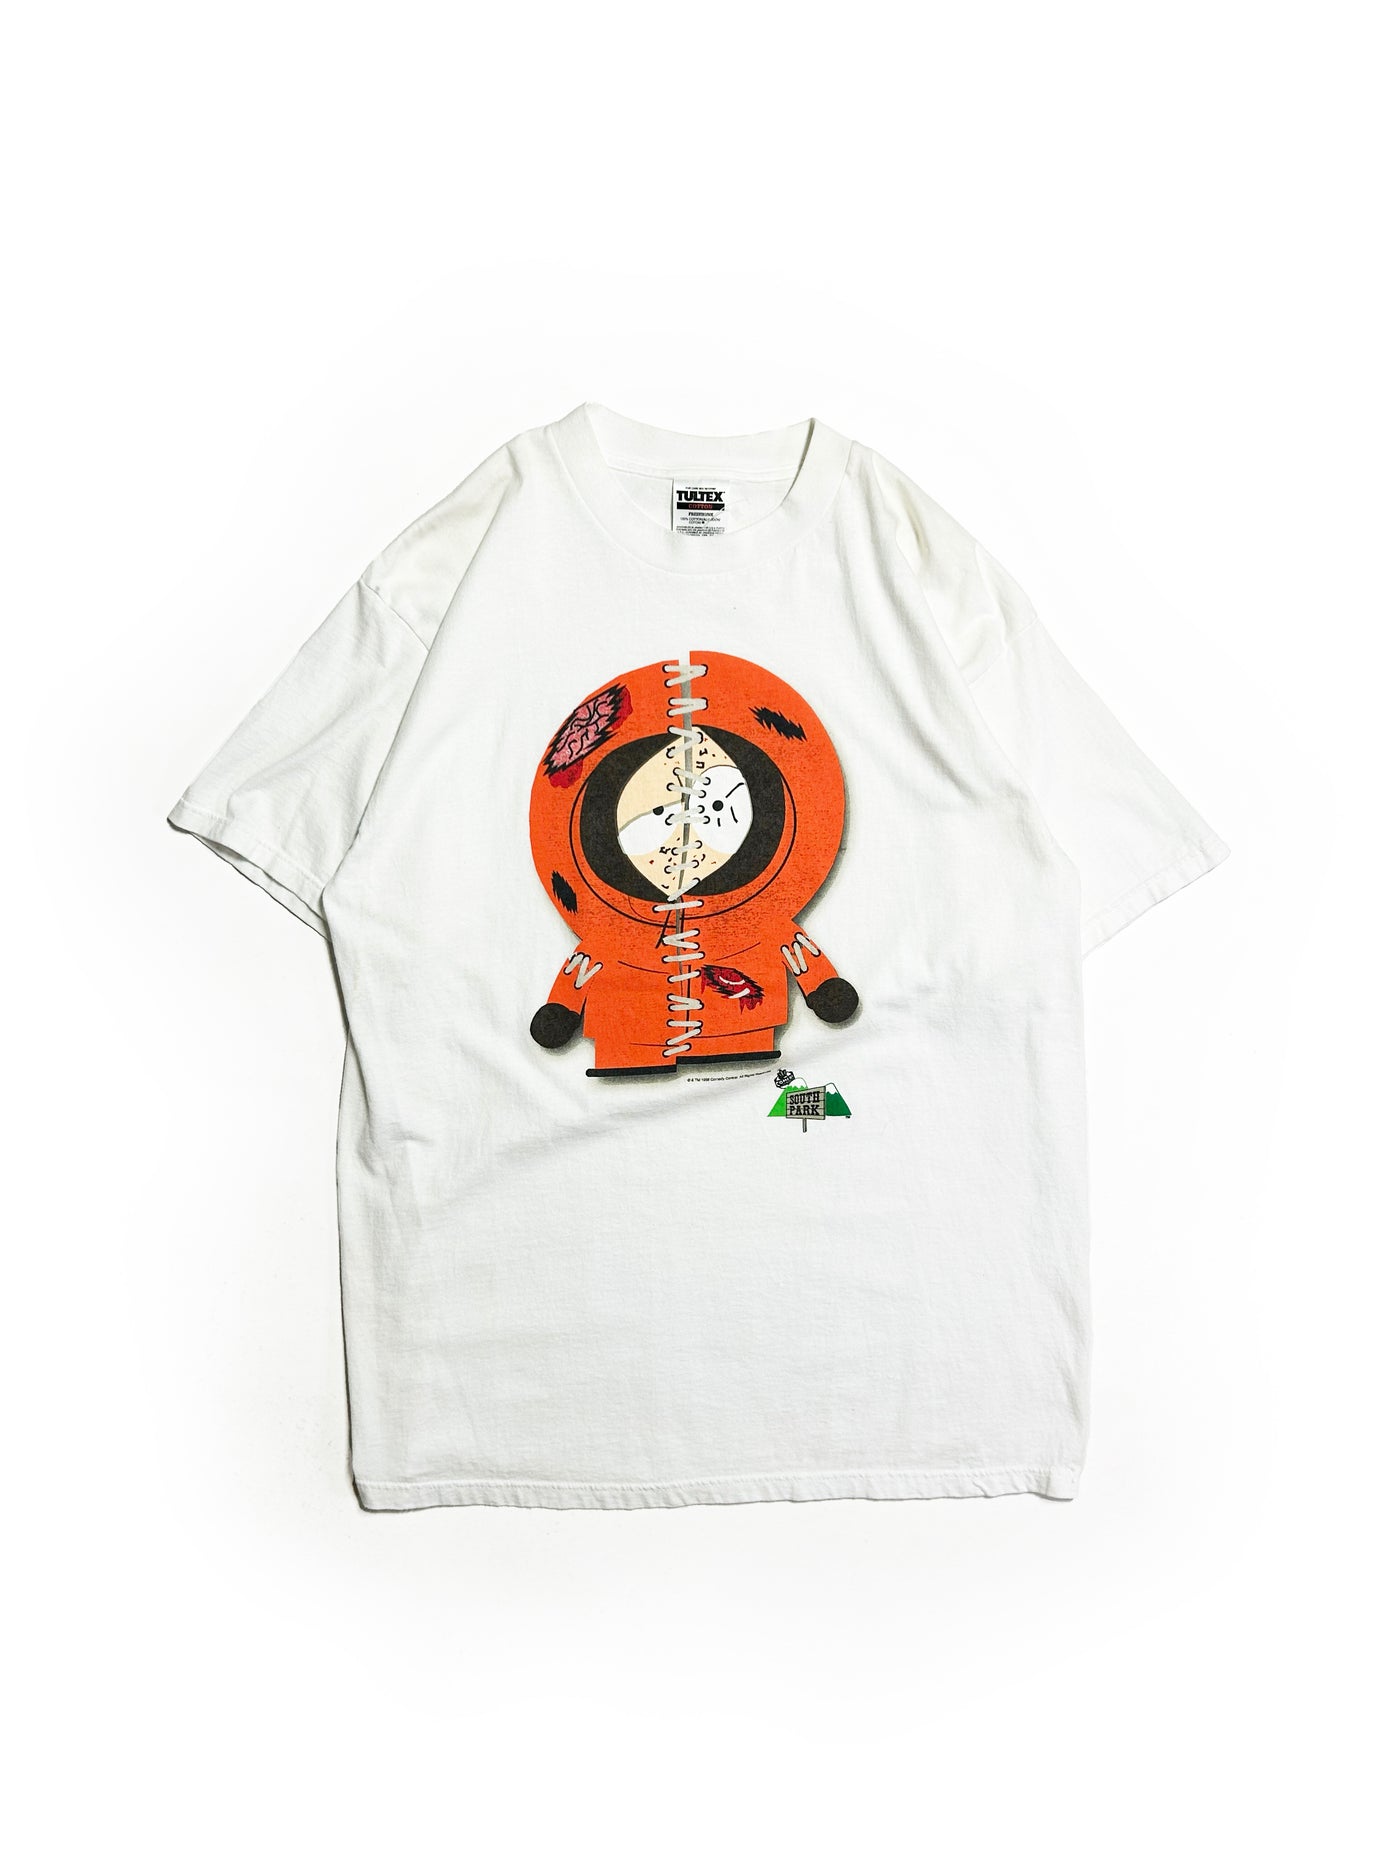 Vintage 1998 Kenny South Park ‘Stitched Up’ T-Shirt